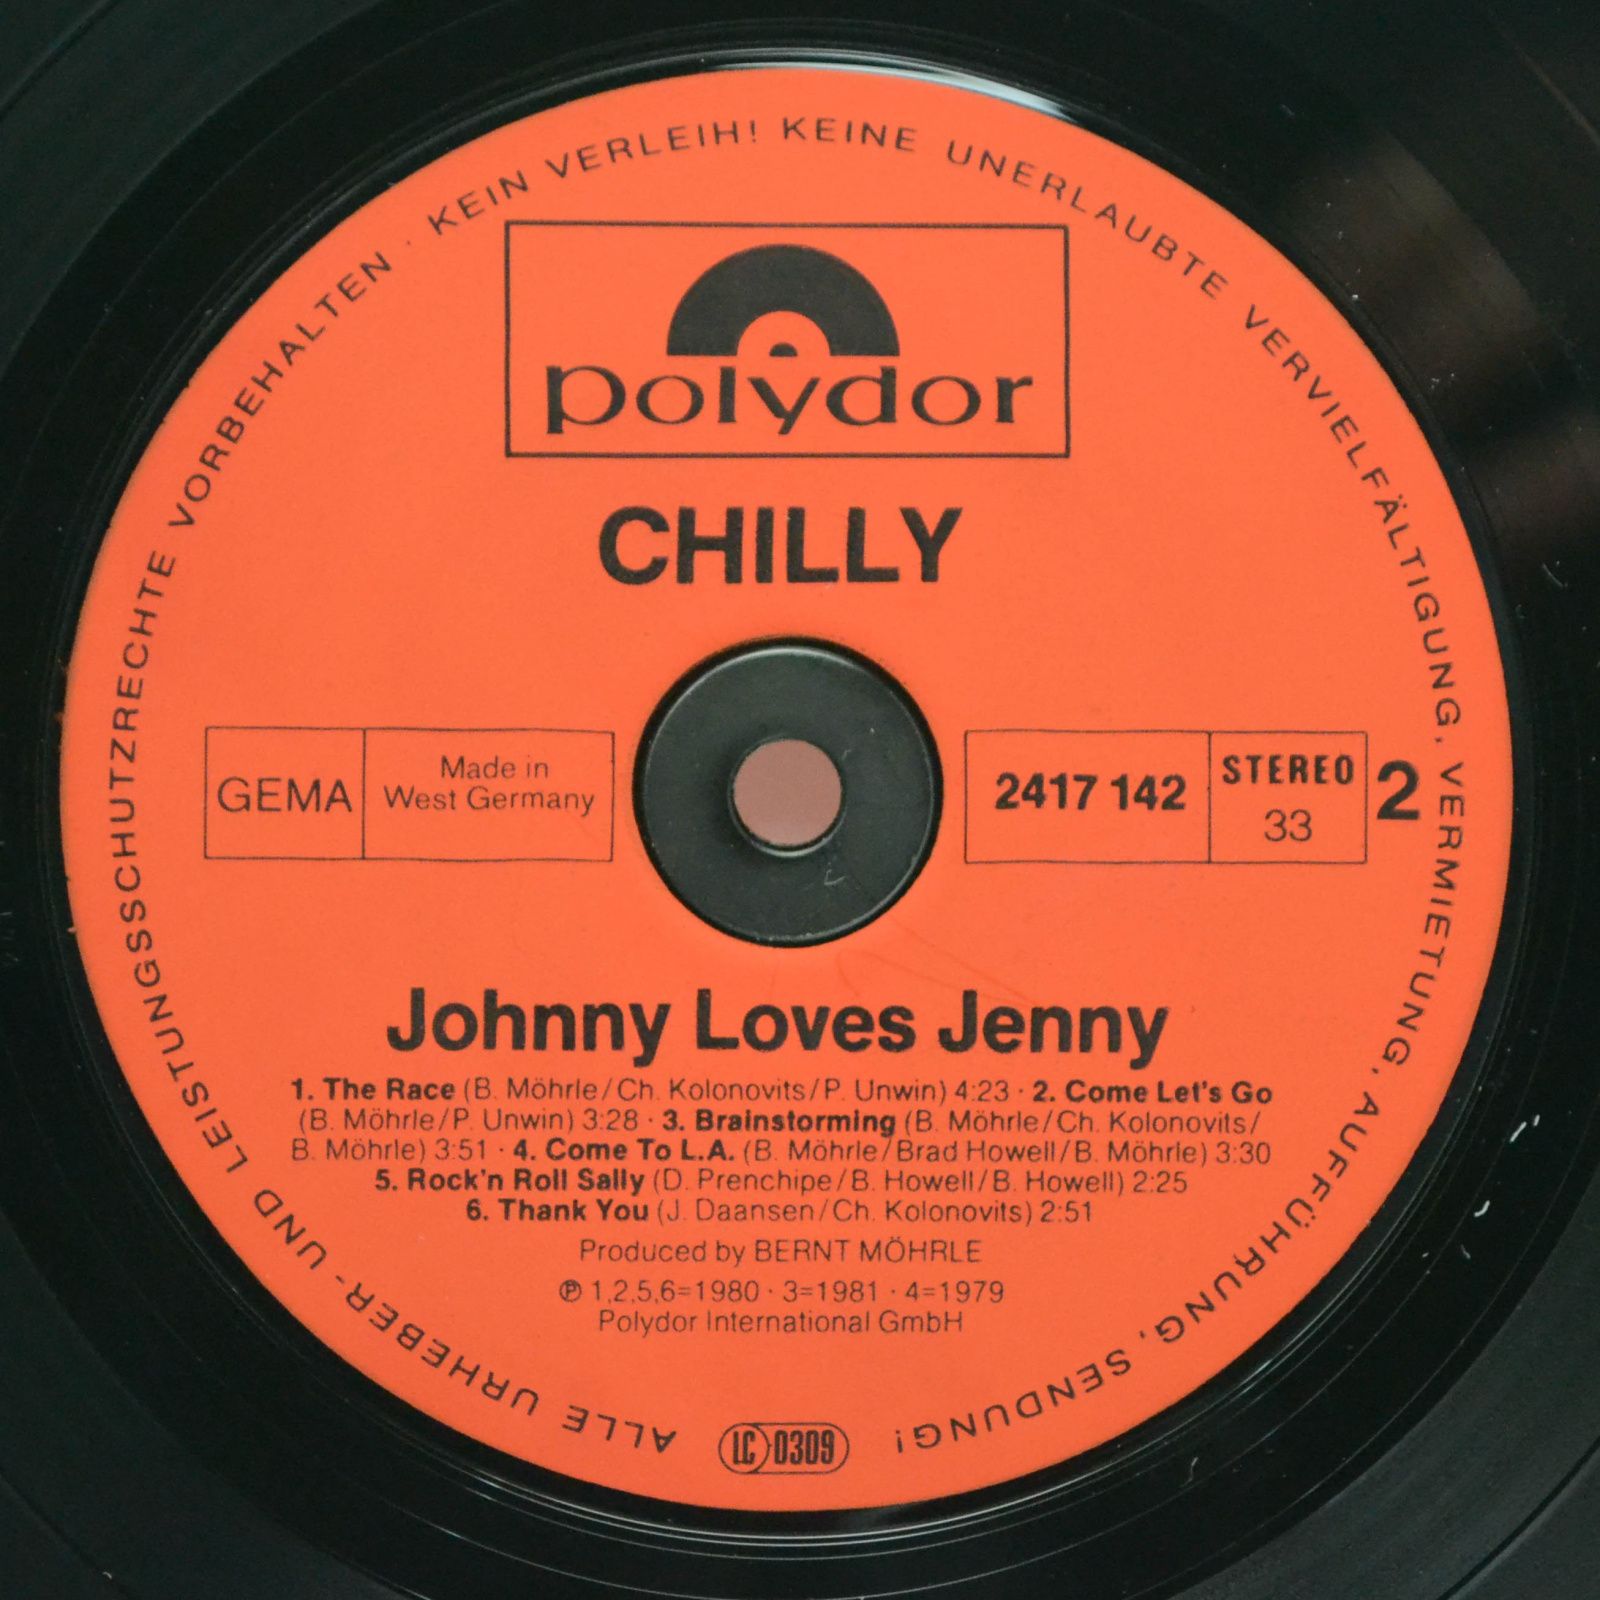 Chilly — Johnny Loves Jenny, 1981